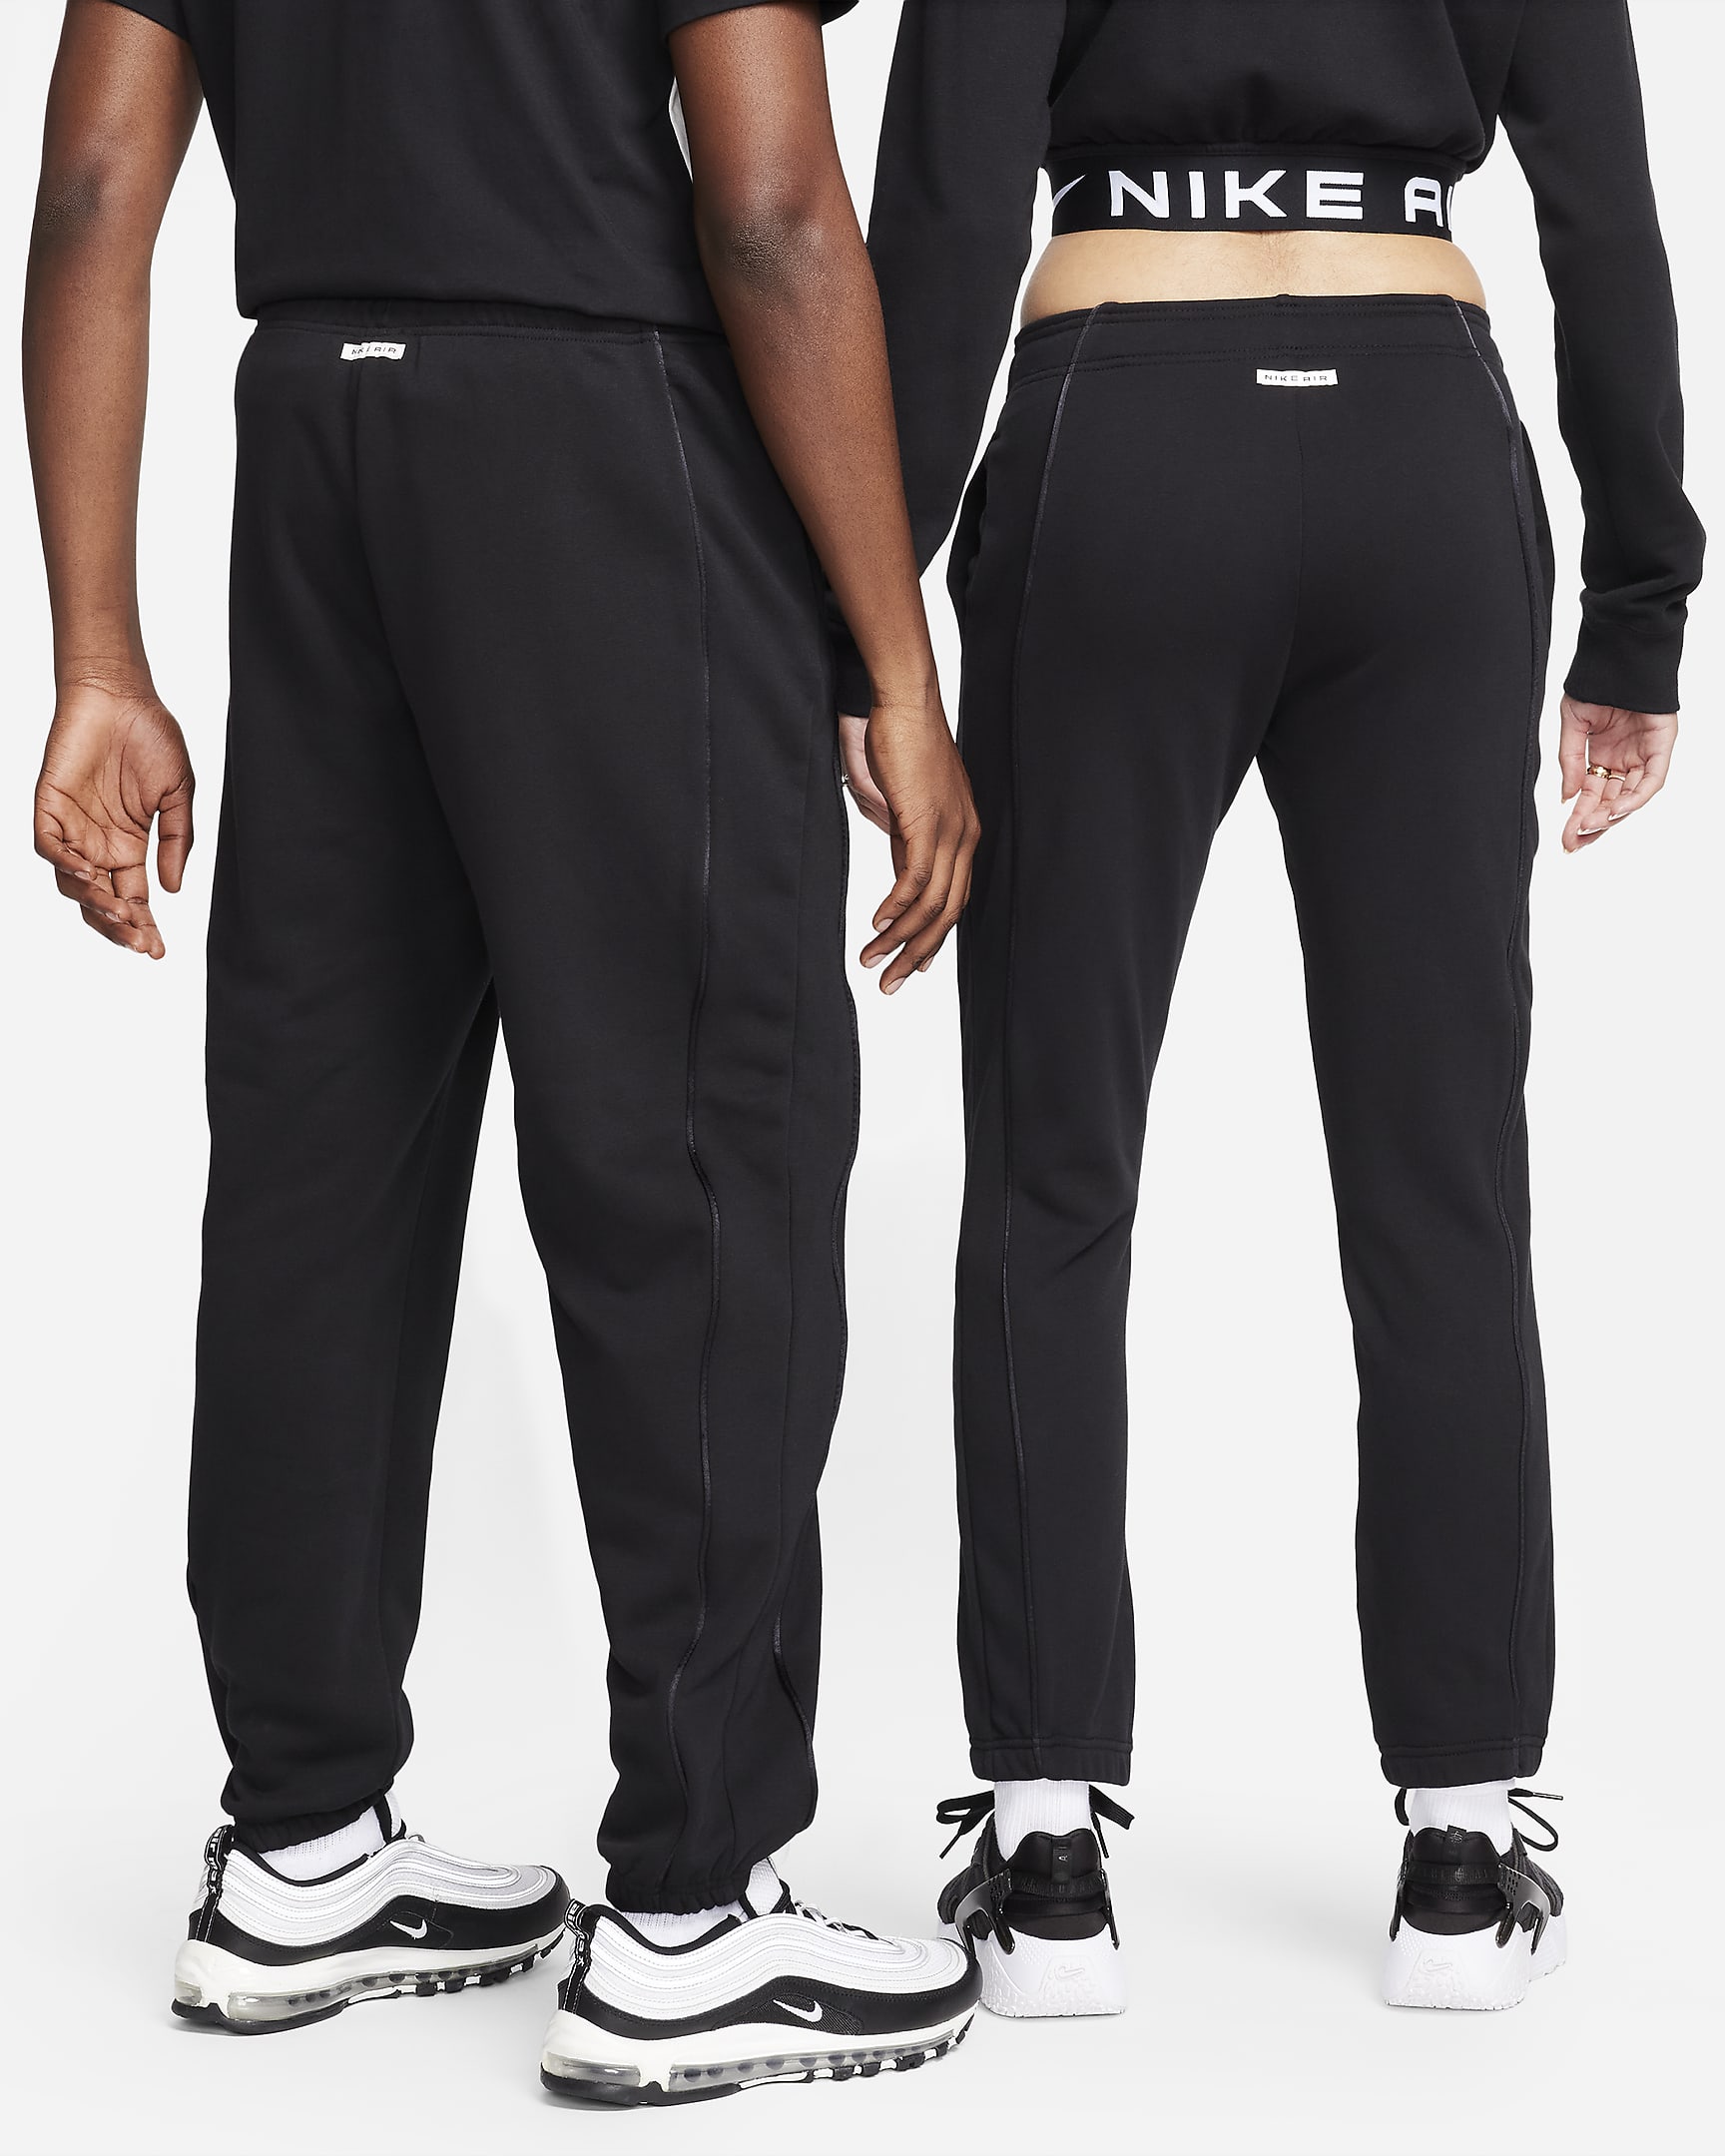 Nike Air Women's Mid-Rise Fleece Joggers. Nike LU